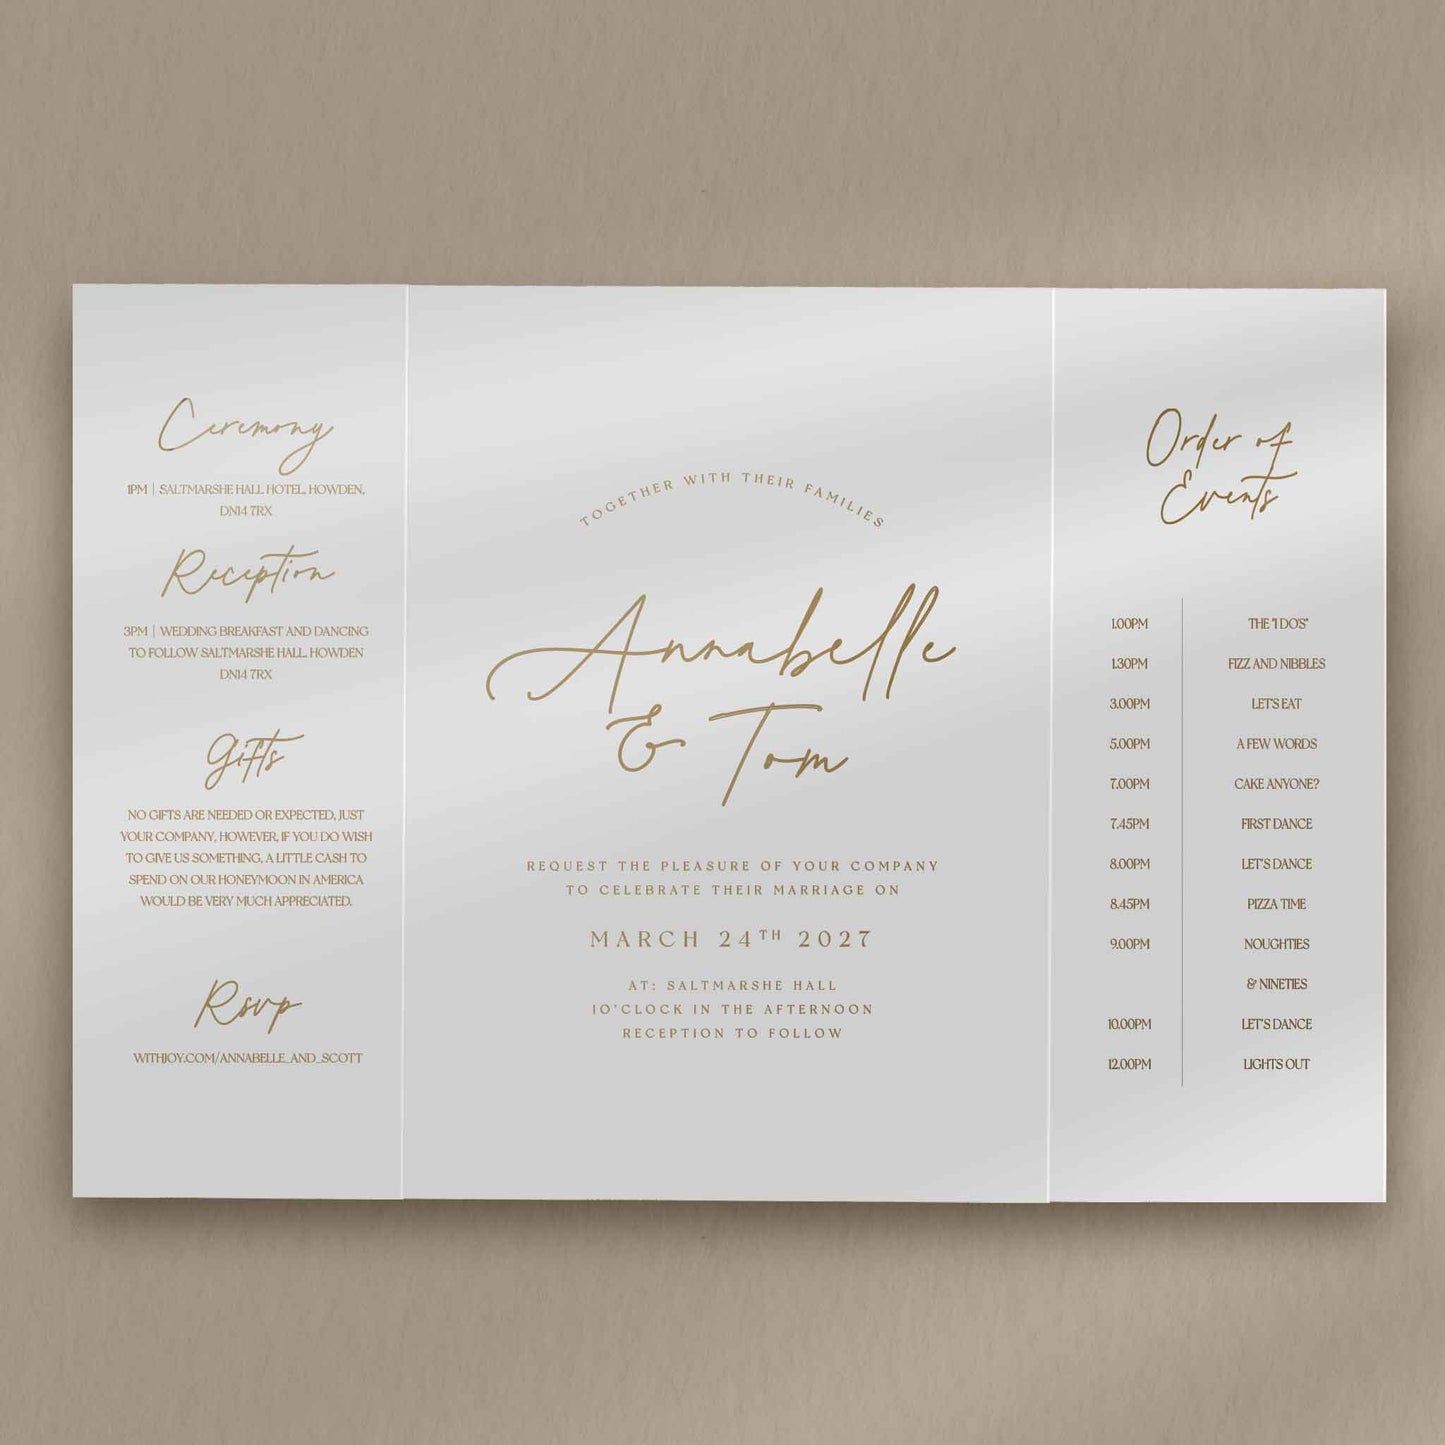 Annabelle Gatefold Invitation  Ivy and Gold Wedding Stationery   